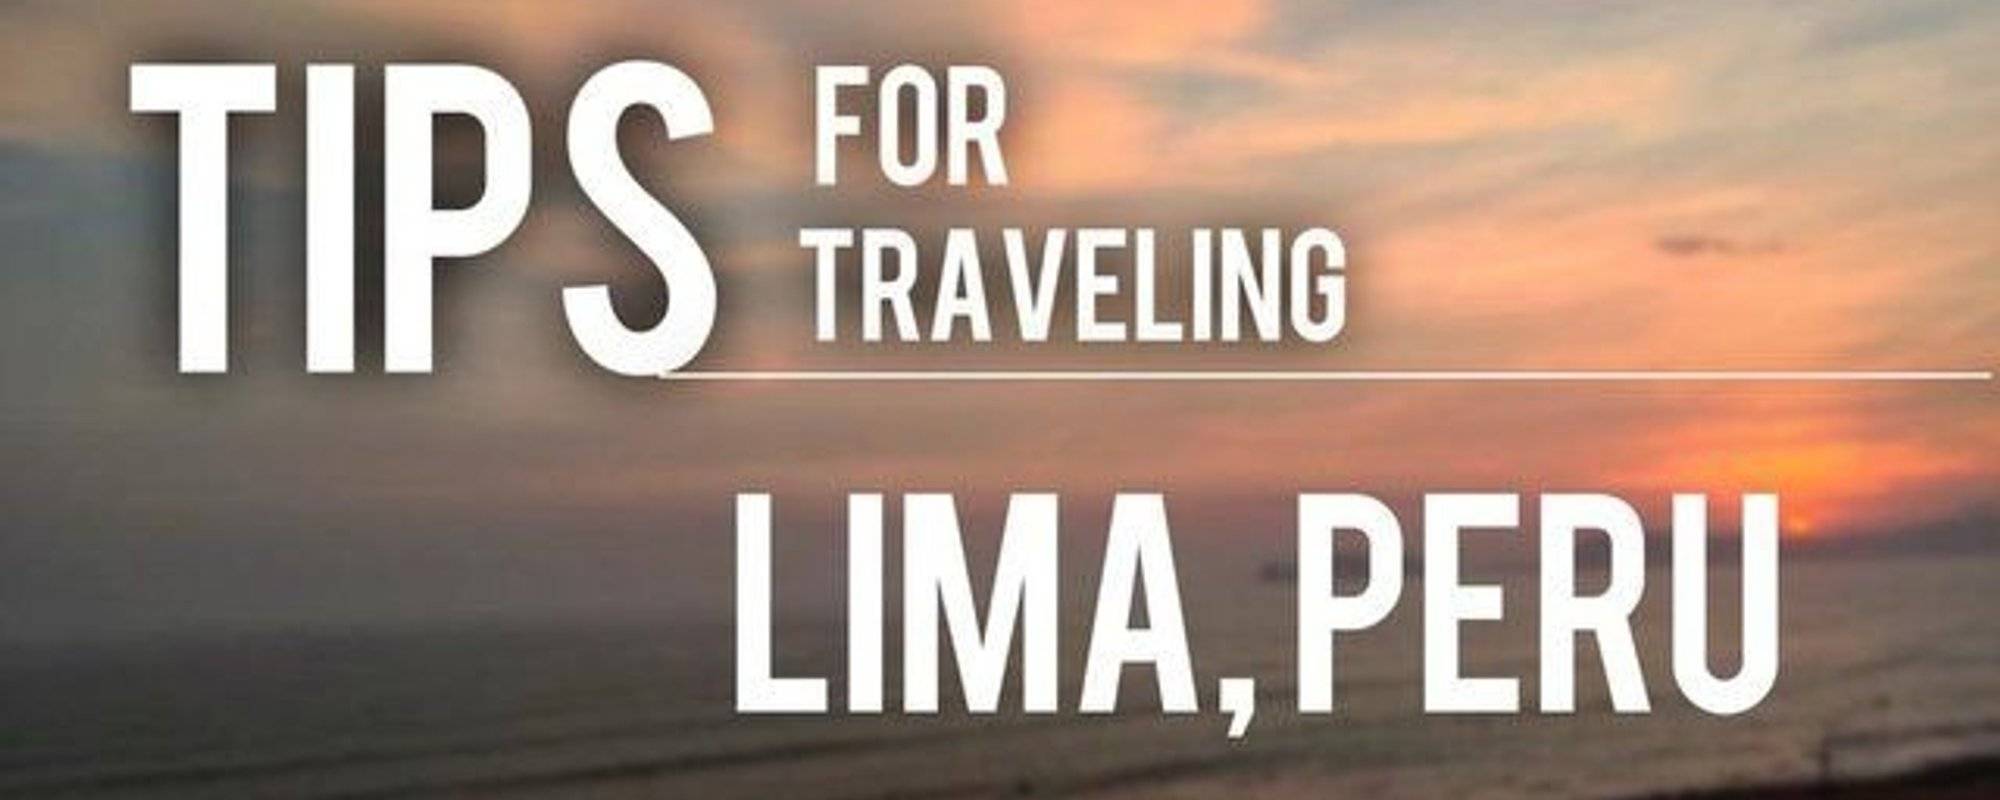 Lima, Peru - For a more perfect trip!